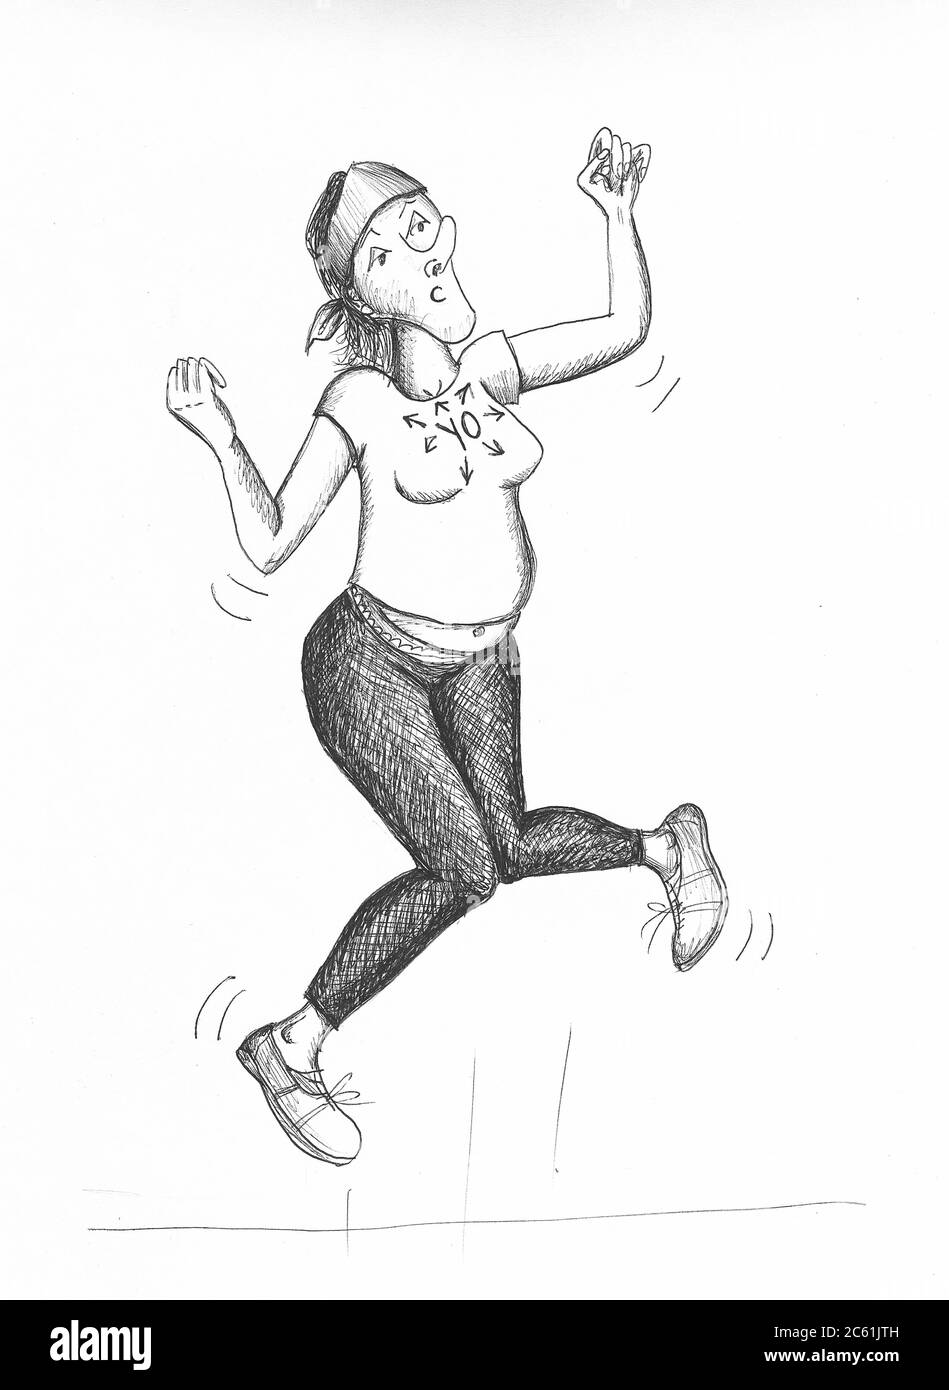 Athletic woman jumping. Illustration. Stock Photo